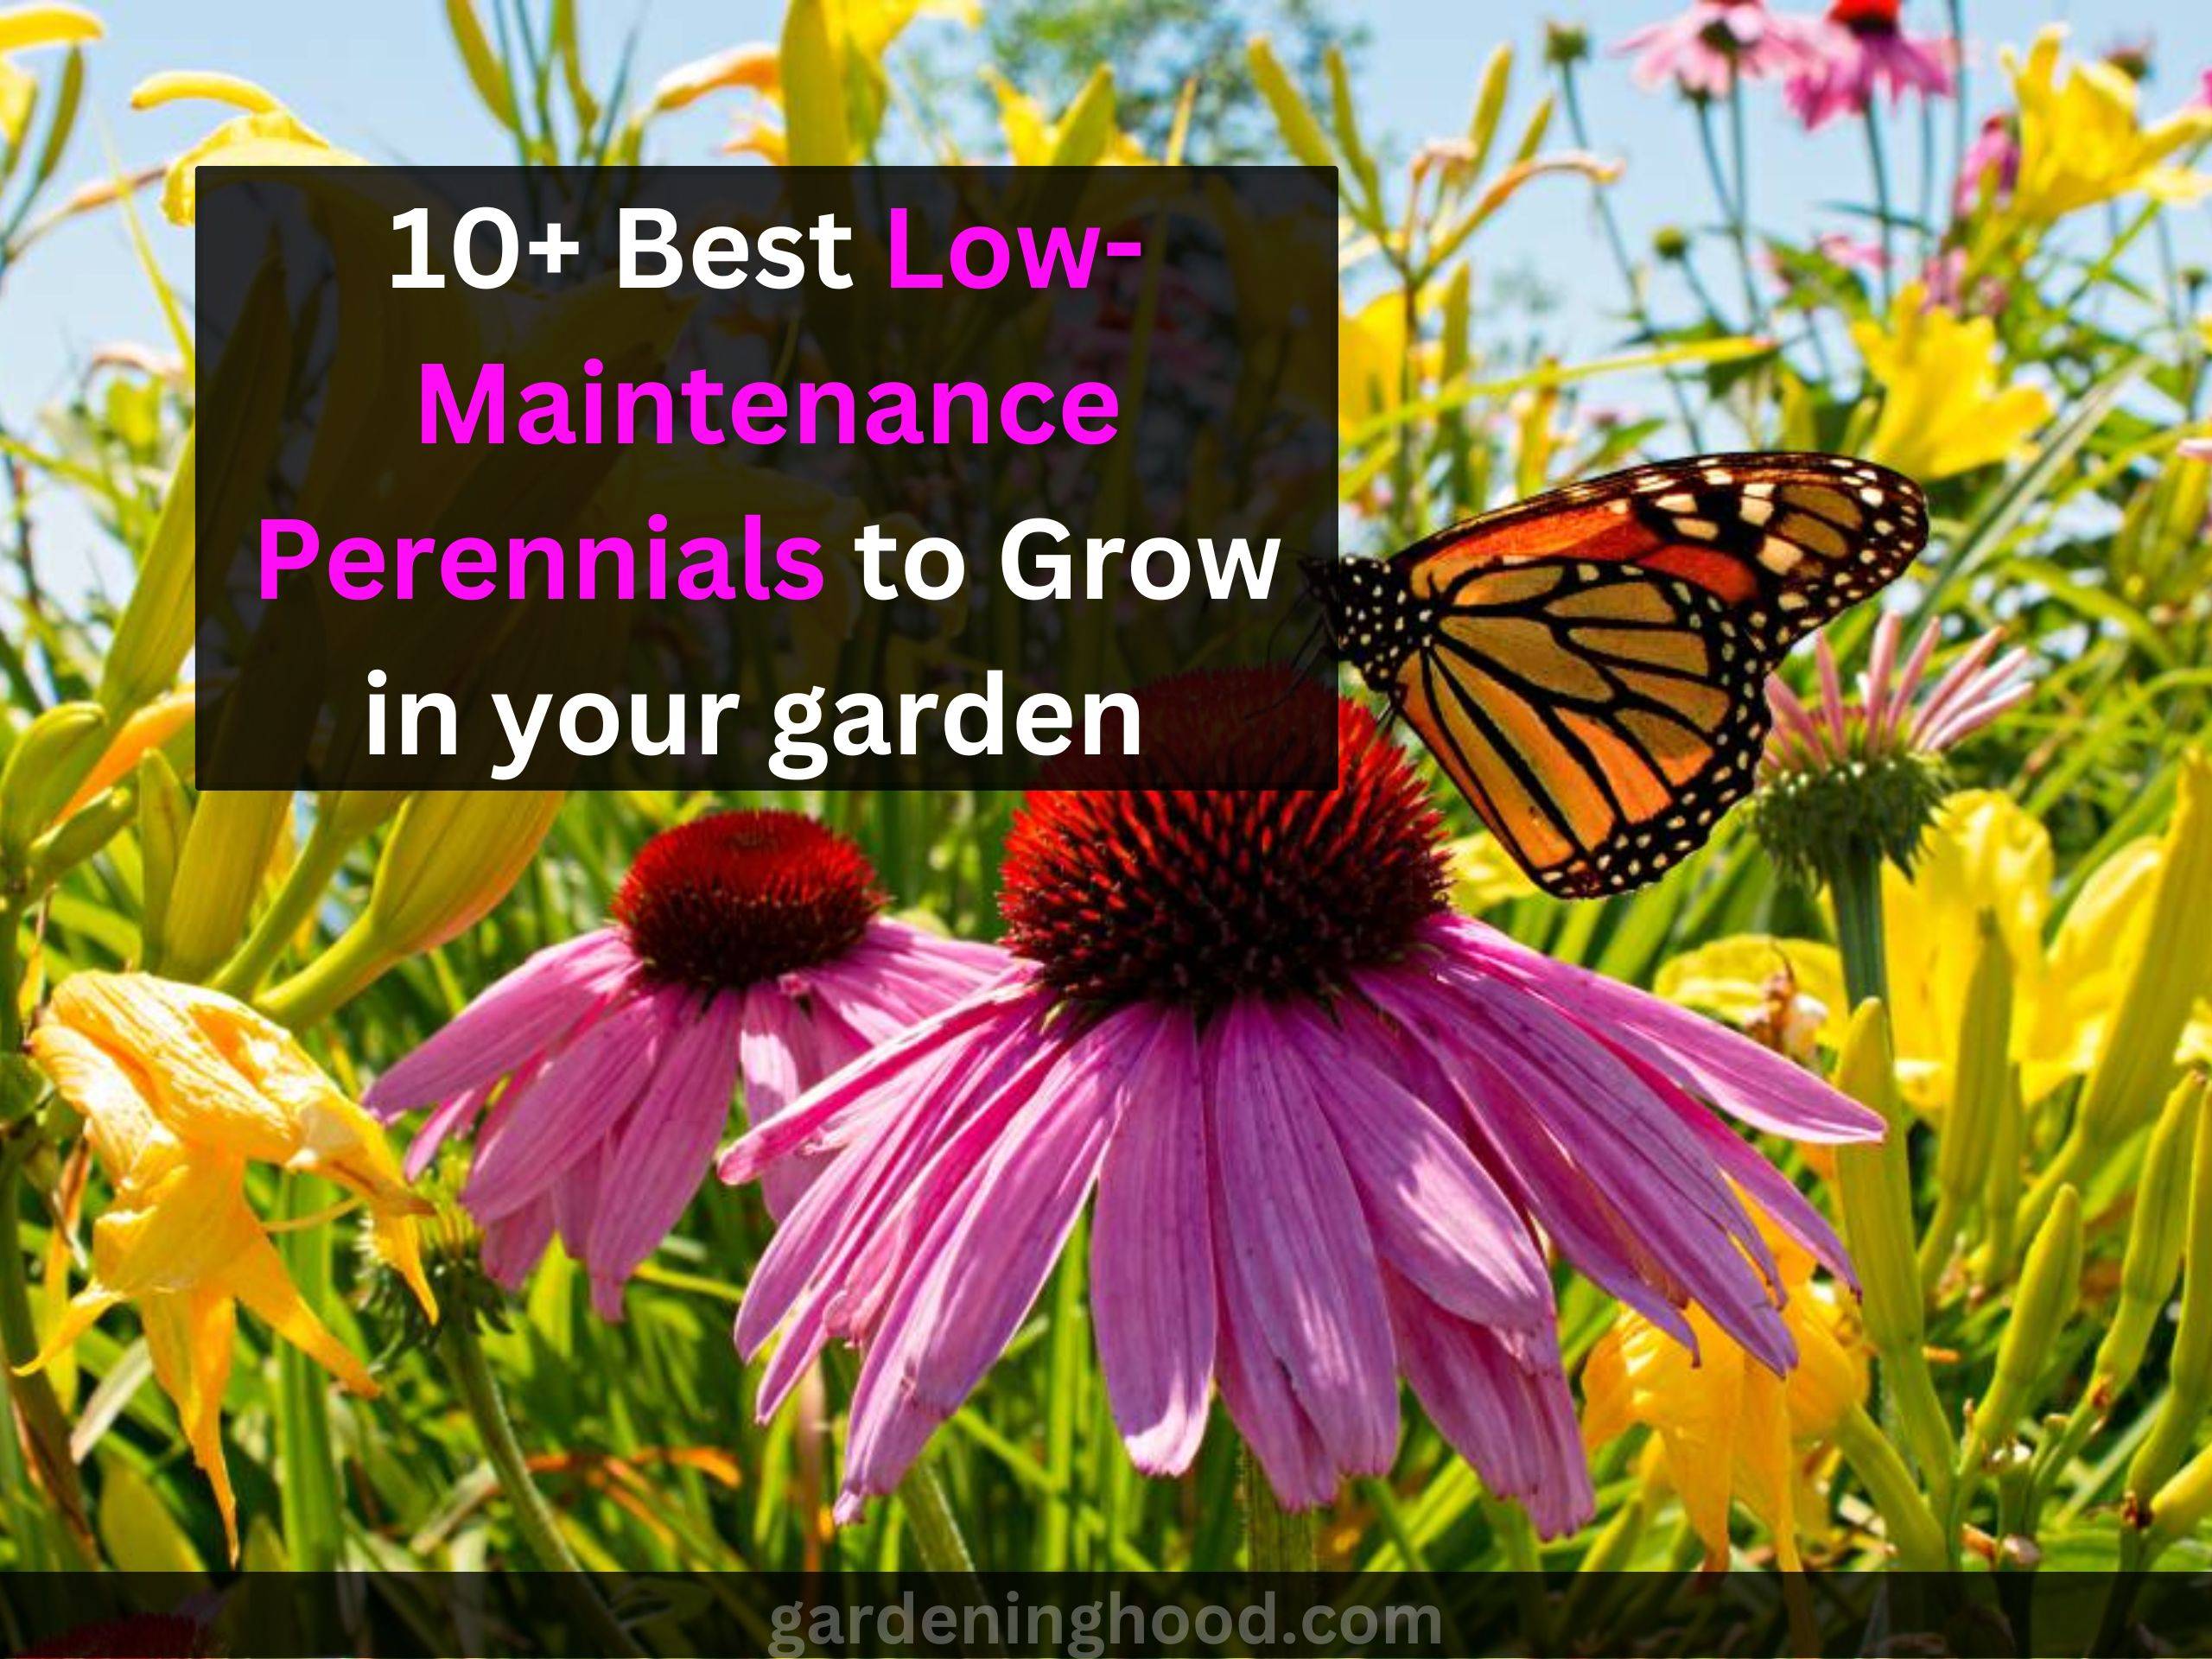 Best Low-Maintenance Perennials to Grow in your garden